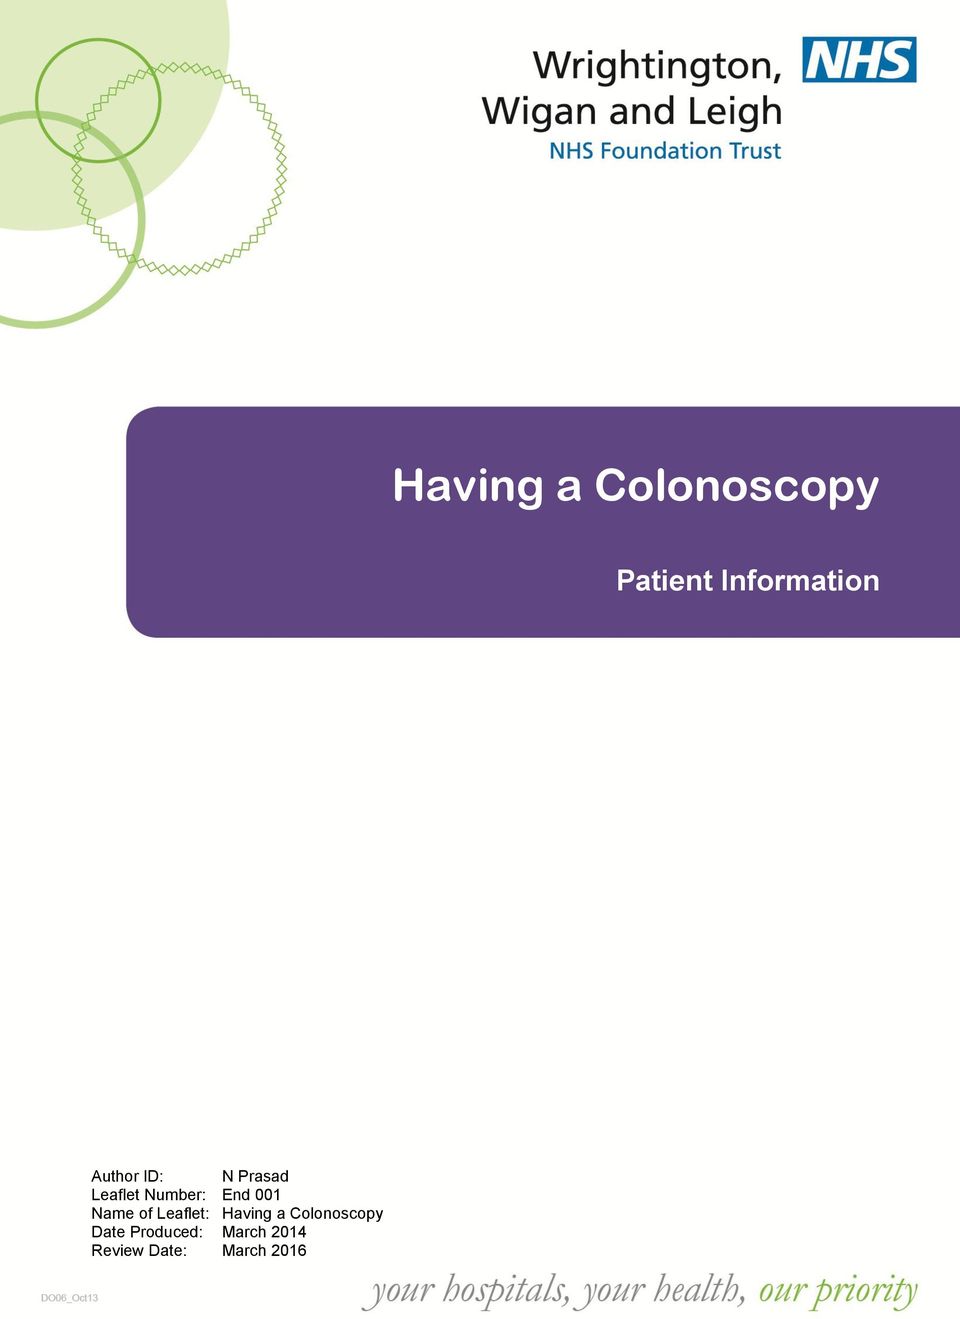 Having a Colonoscopy Date Produced: March 2014